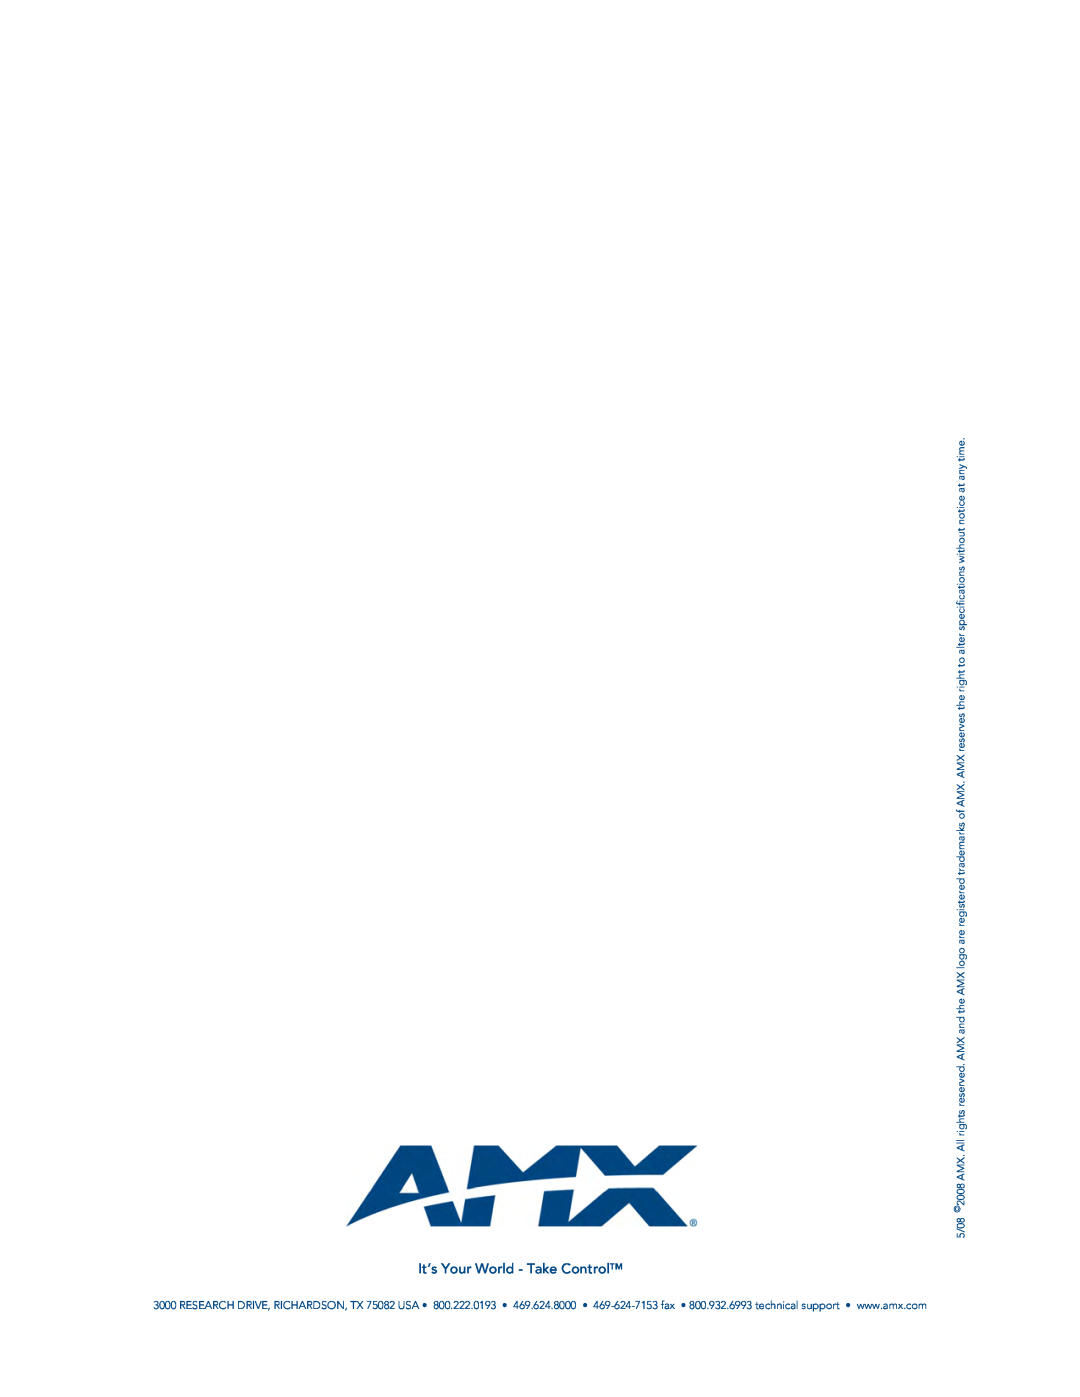 AMX NXI-x000 Series manual It’s Your World - Take Control 